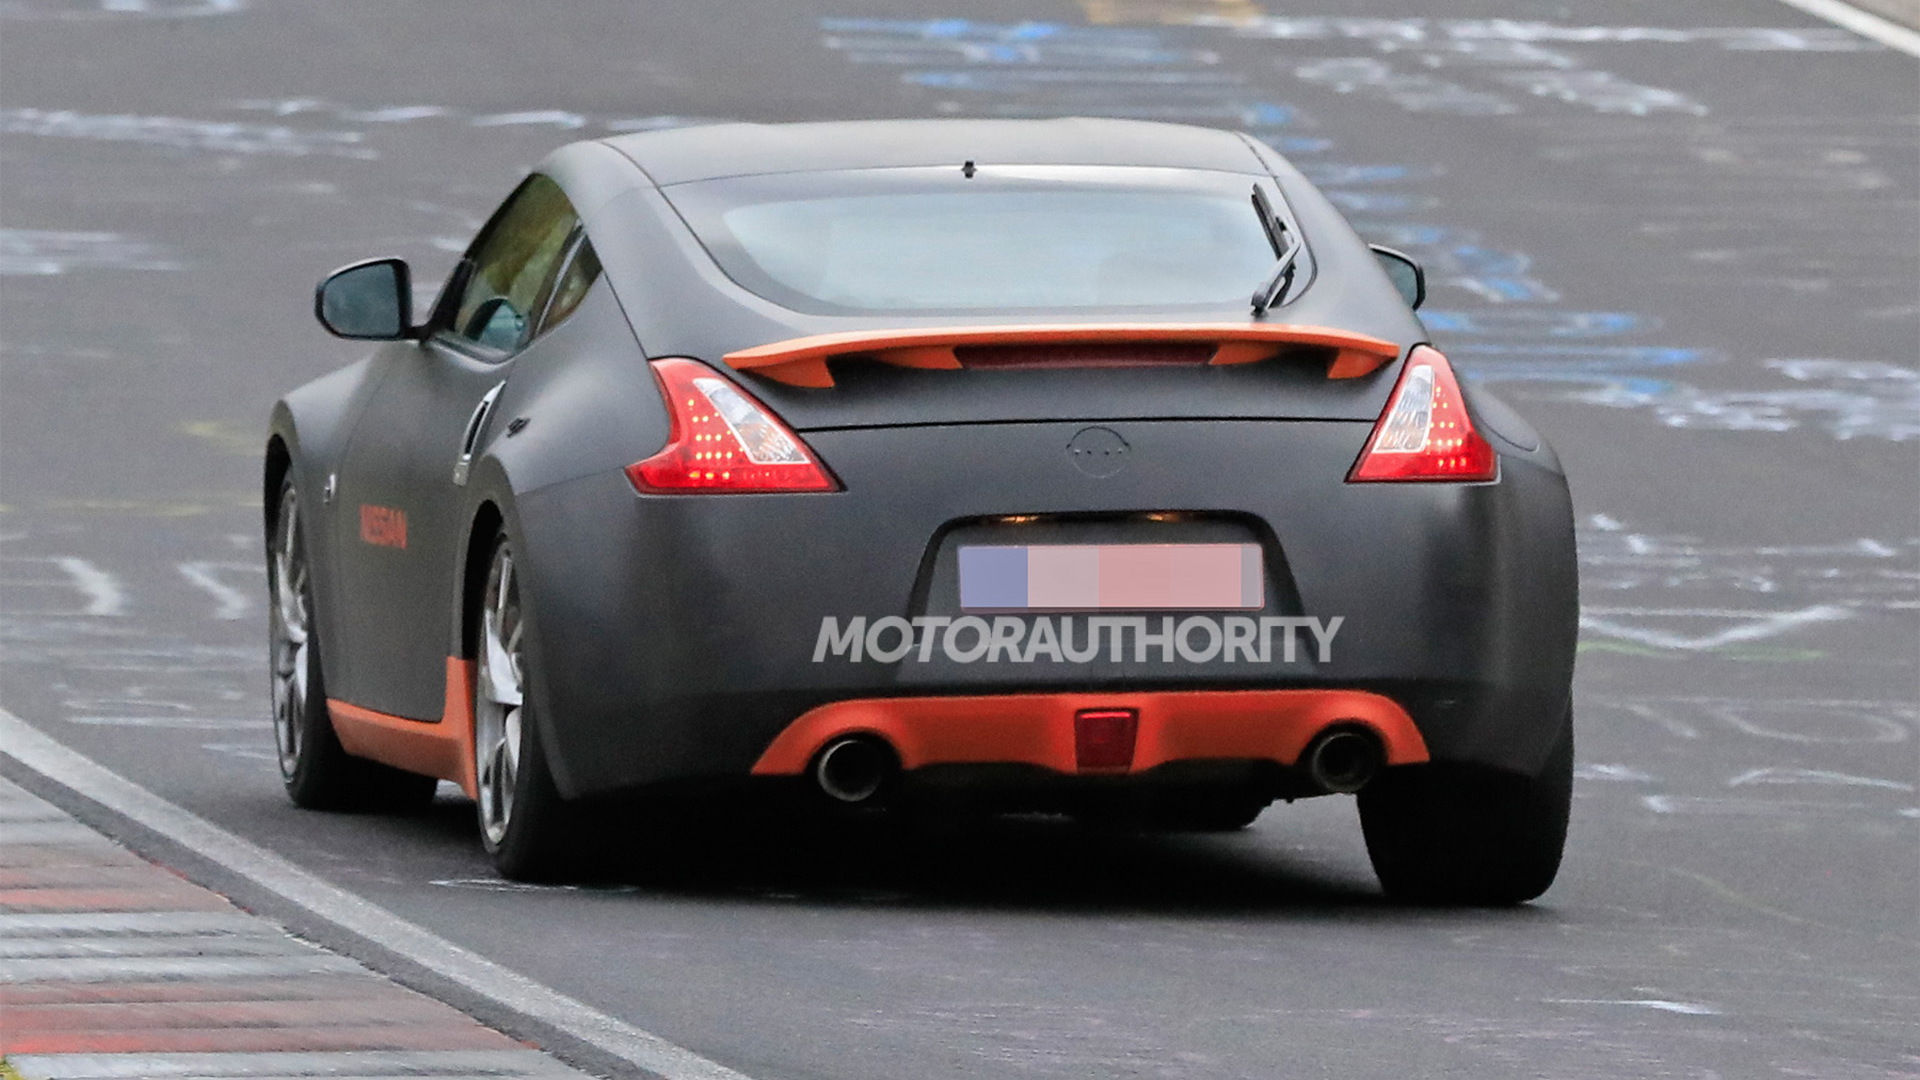 2022 Nissan Z sports car test mule spy shots - Photo credit: S. Baldauf/SB-Medien